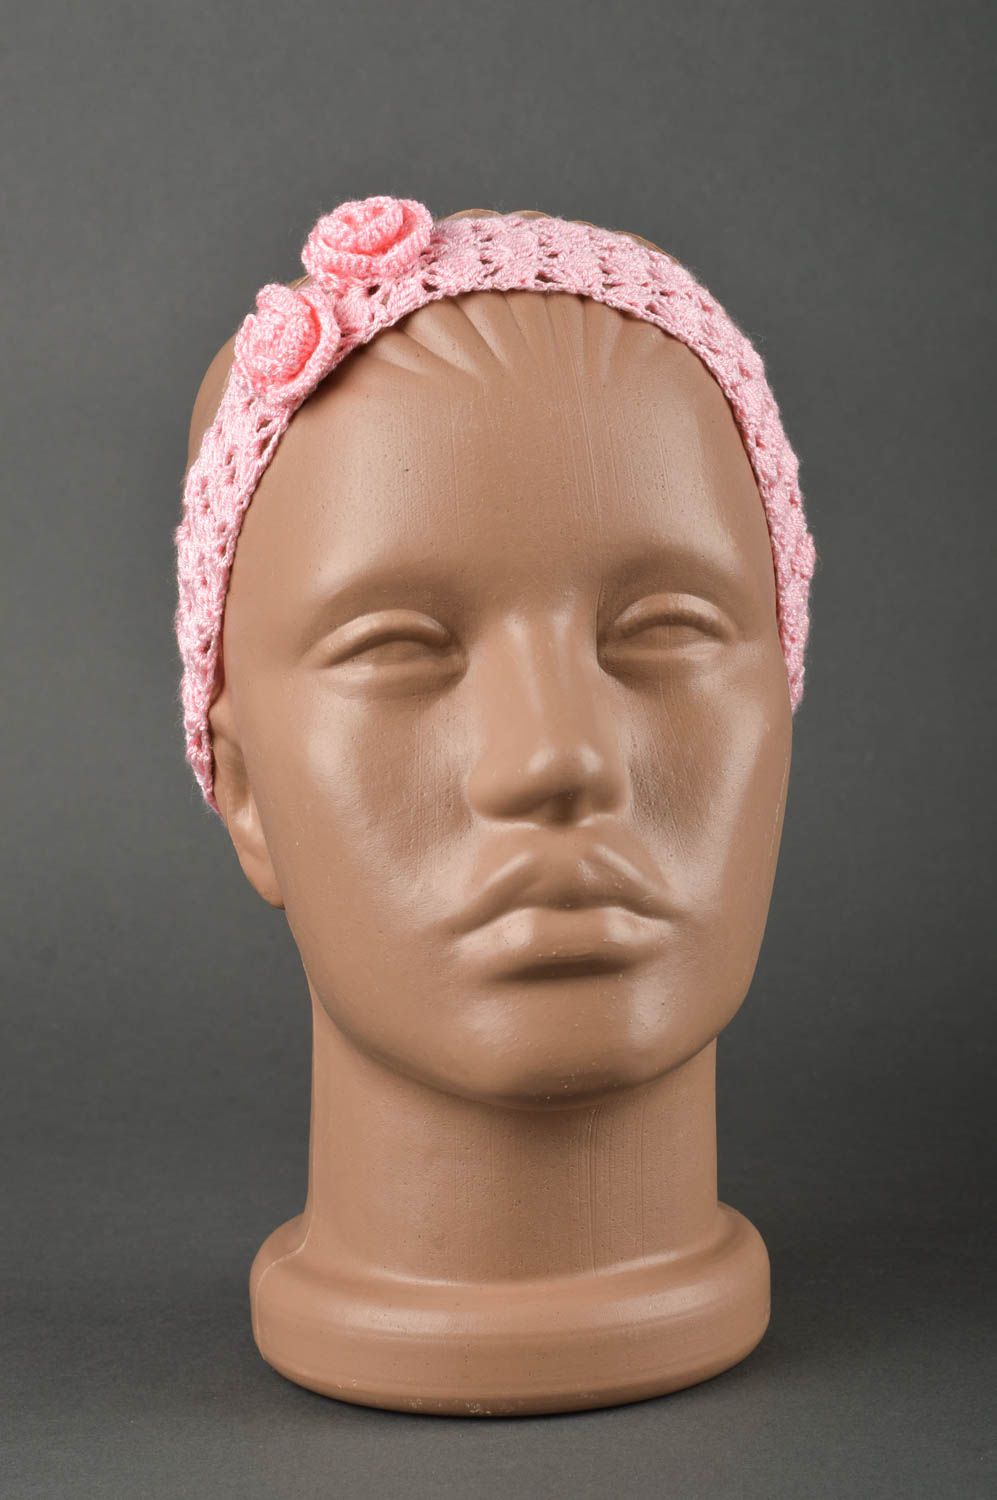 Unusual handmade crochet headband designer hair accessories for girls gift ideas photo 1